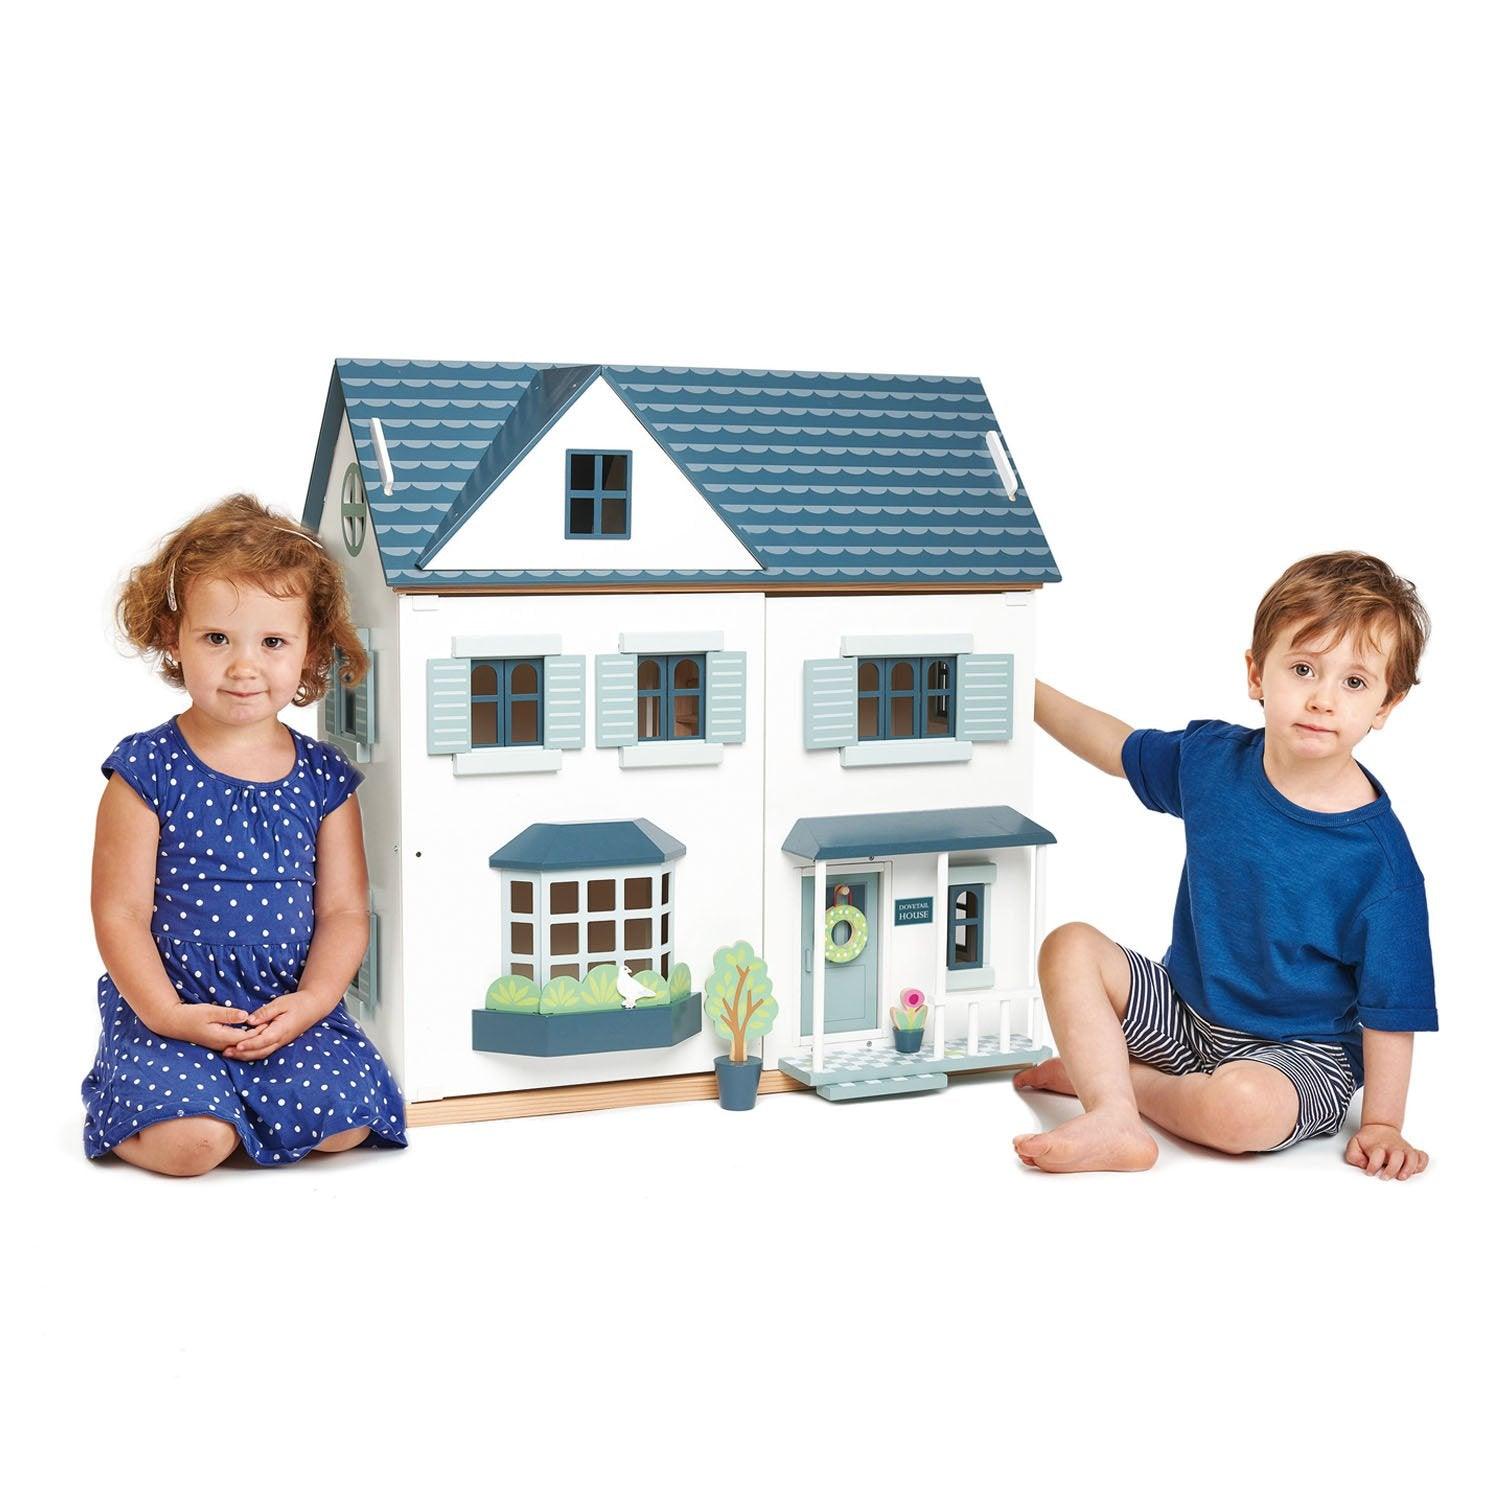 Tender Leaf Toys: trzypiętrowy domek dla lalek Dovetail House - Noski Noski